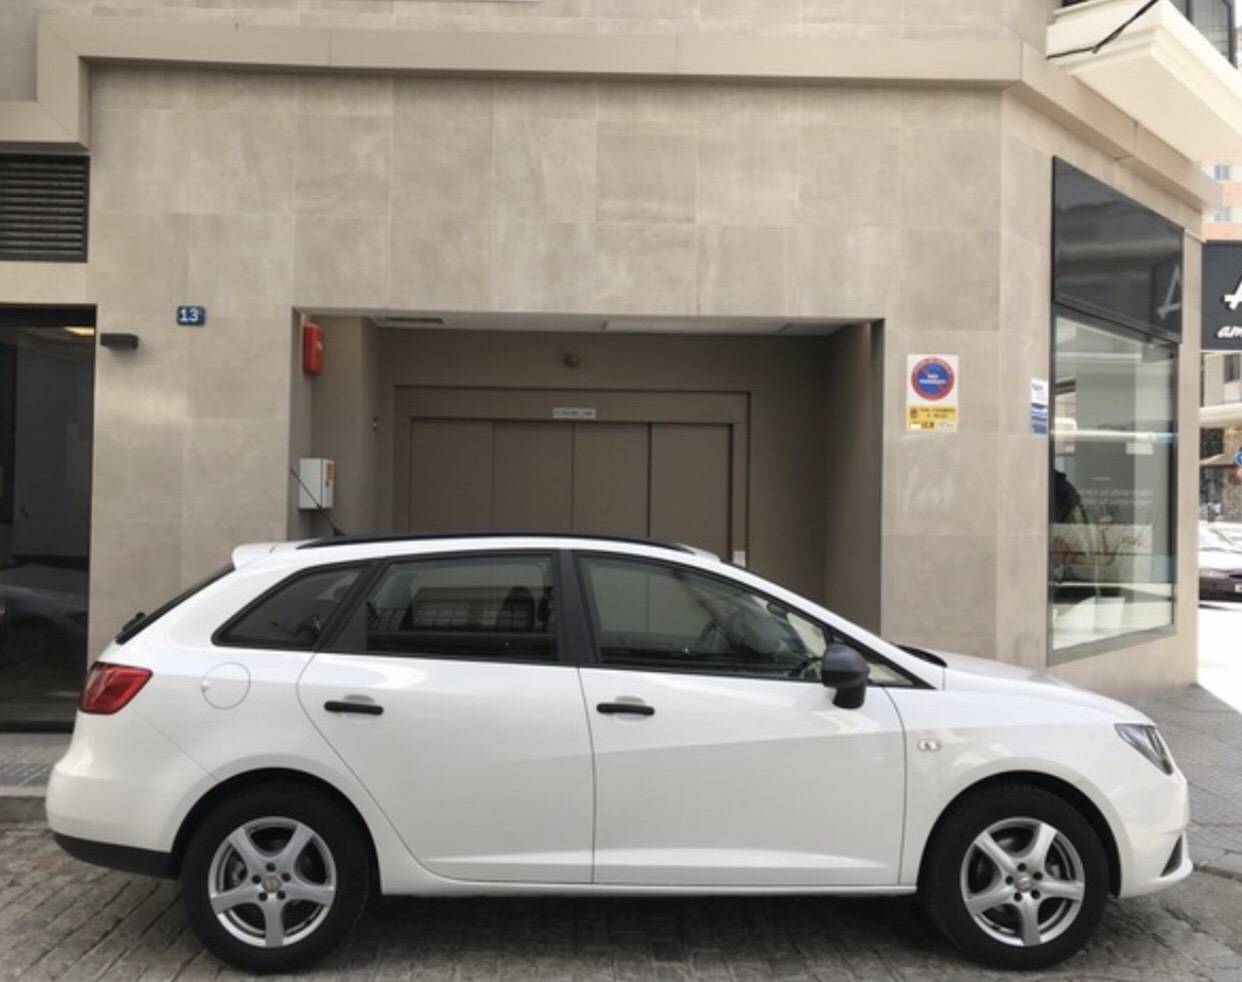 Acheter une voiture SEAT IBIZA ST 2016 1.2 TSI 90CV d'occasion à Málaga. Avec la garantie de Larios Rental